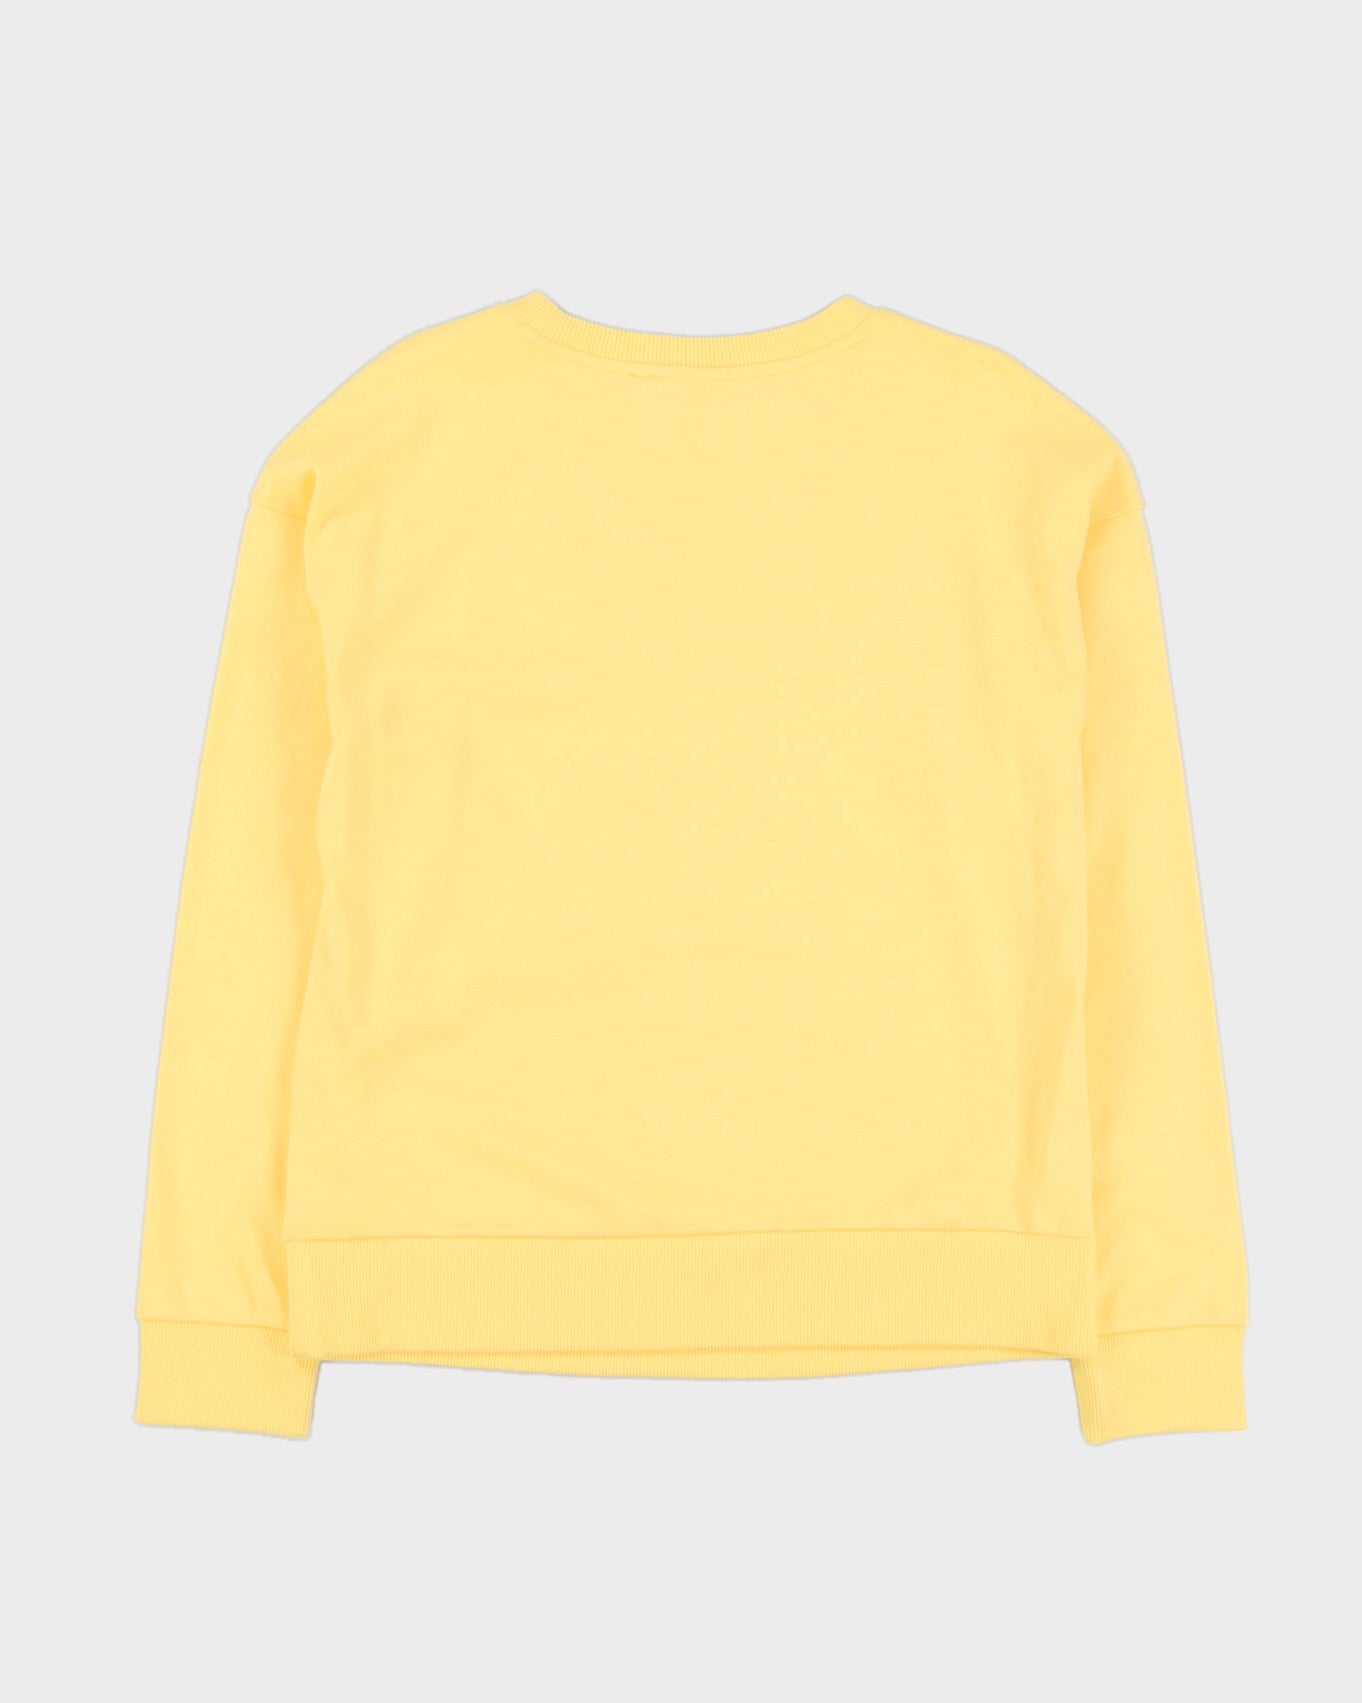 Hugo Boss Reverse Logo Pastel Yellow Sweatshirt - M